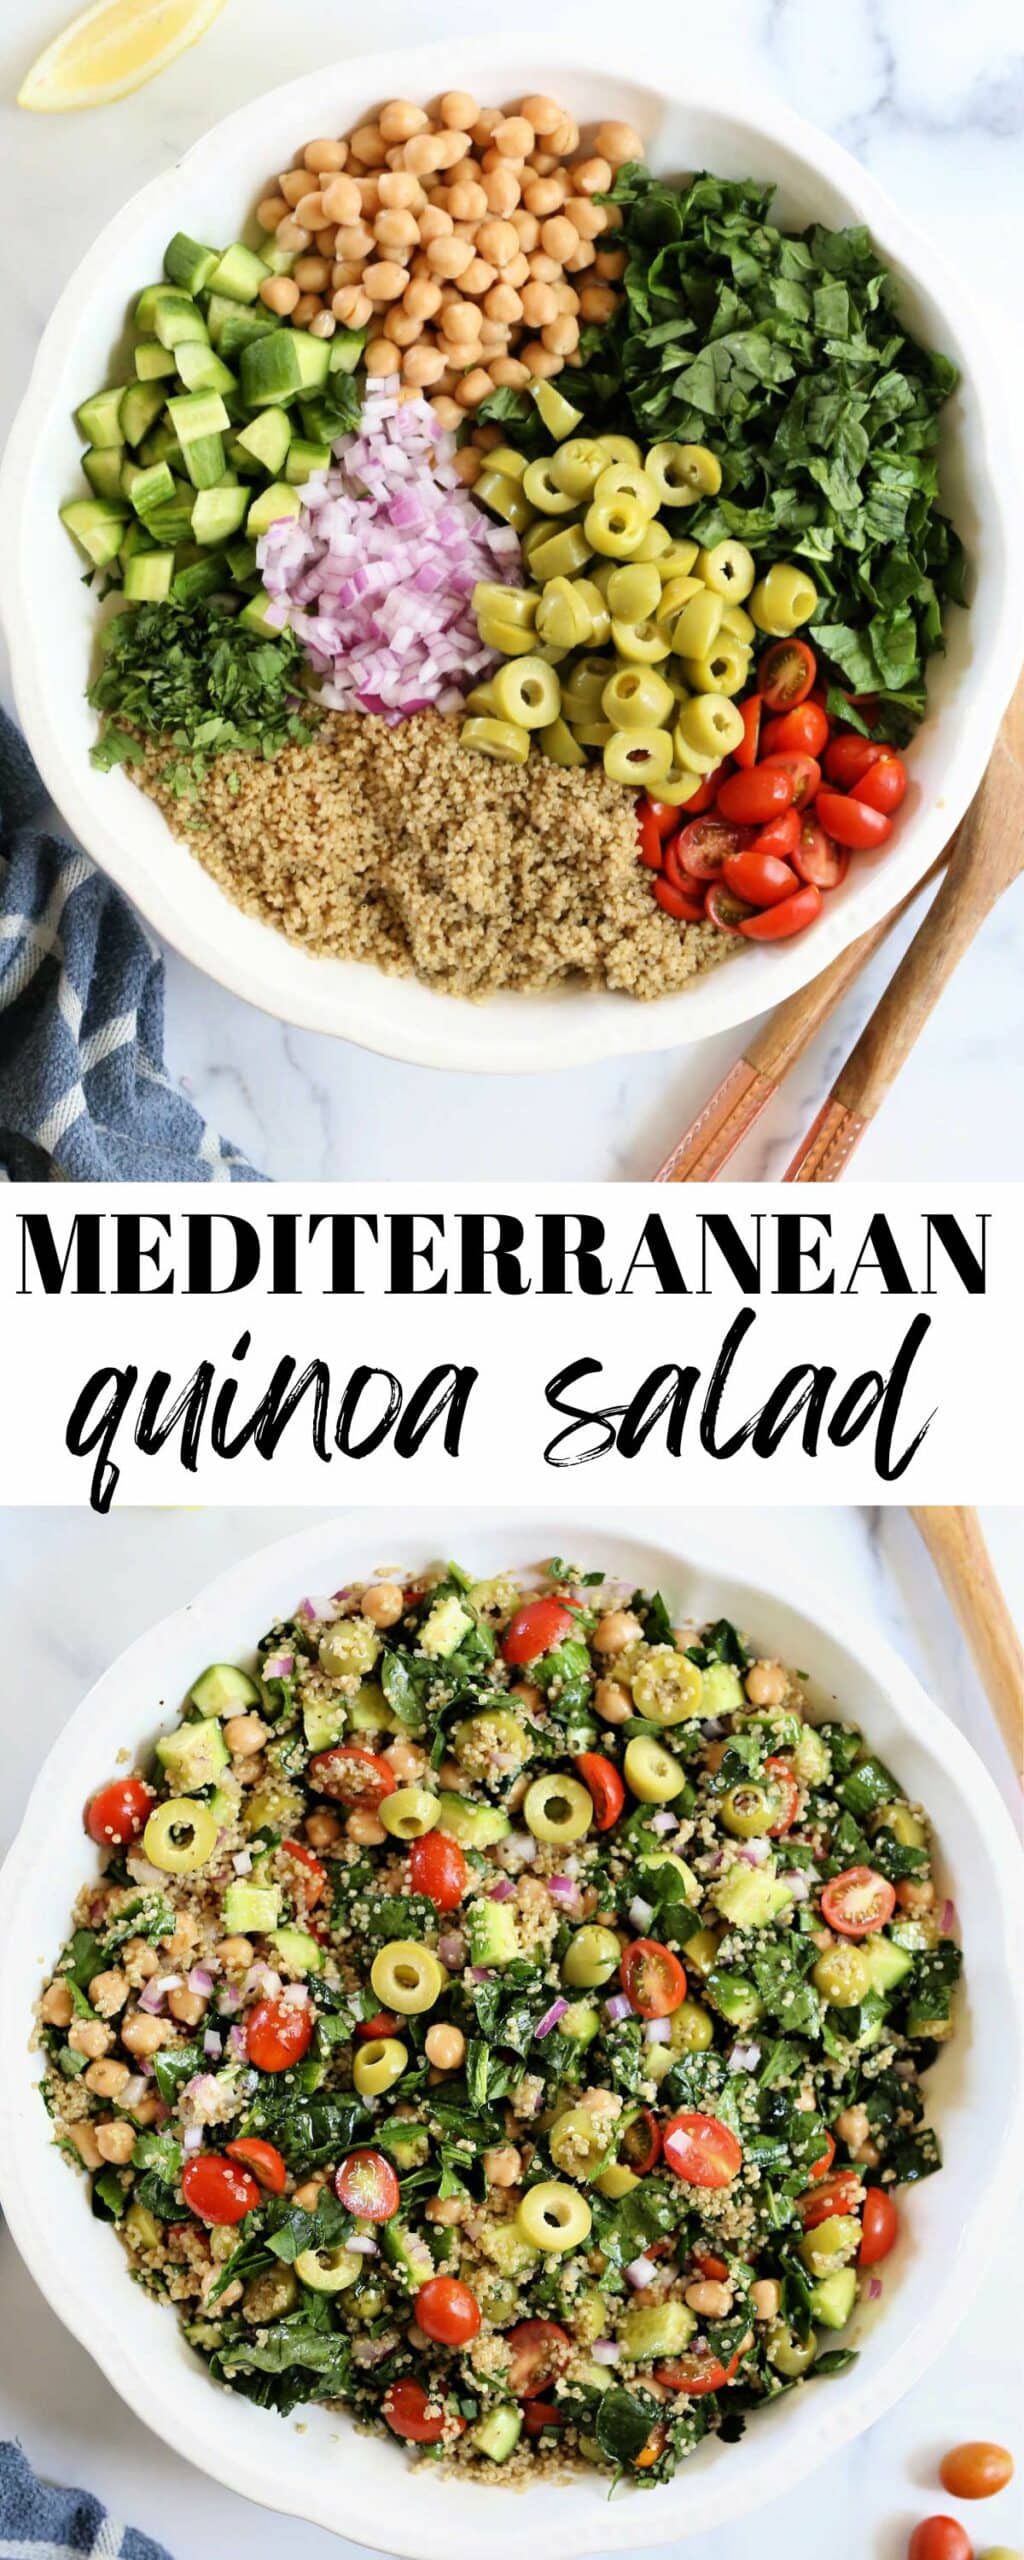 Life-Changing Mediterranean Quinoa Salad Recipe